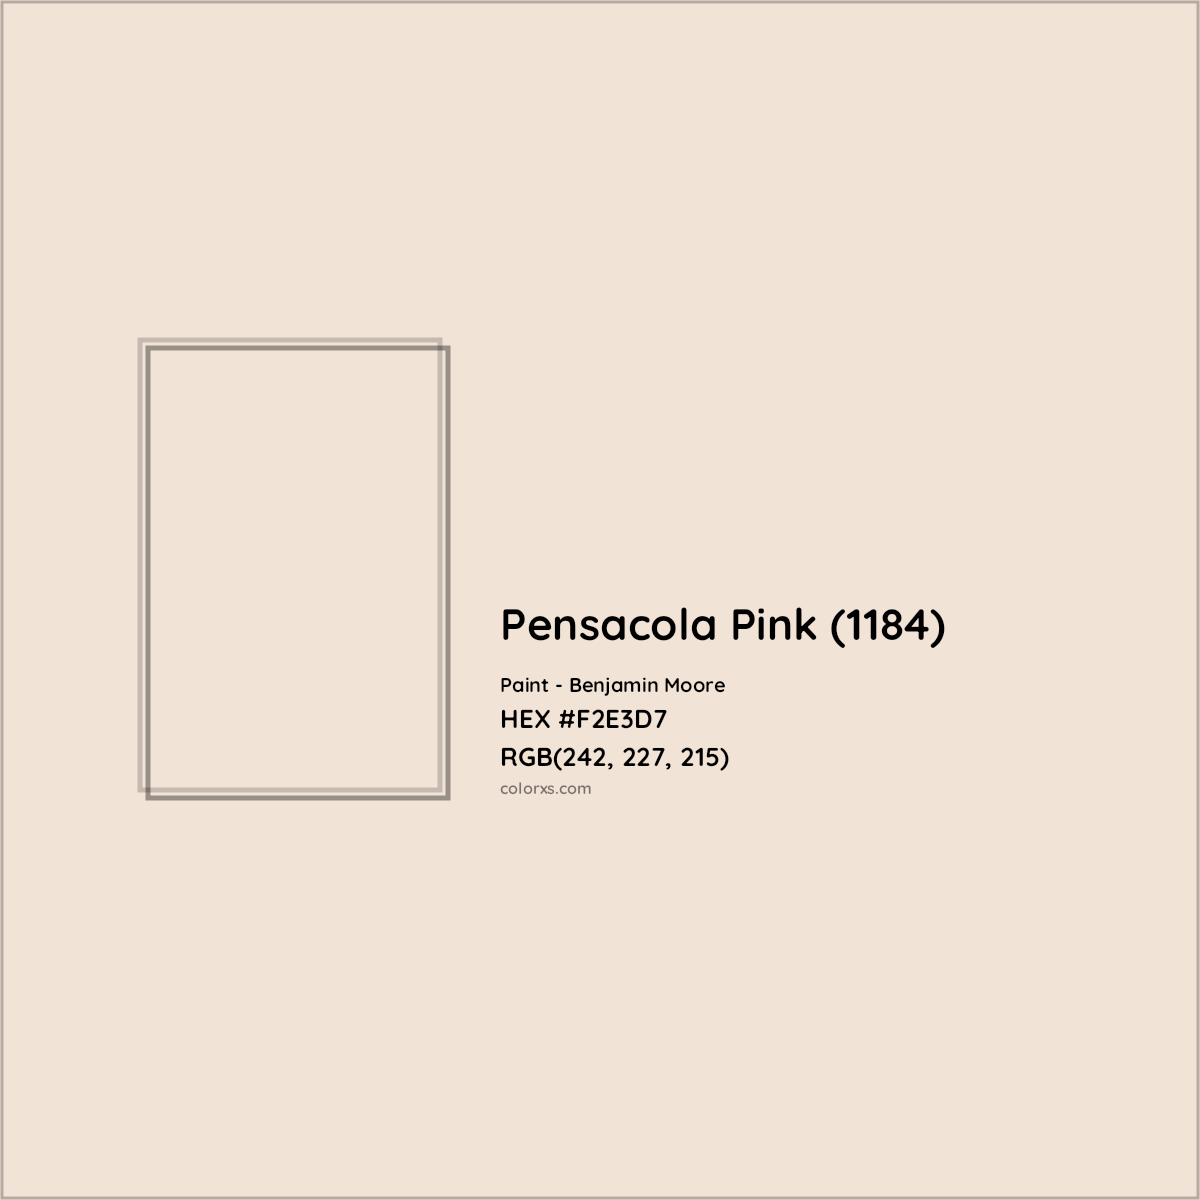 HEX #F2E3D7 Pensacola Pink (1184) Paint Benjamin Moore - Color Code